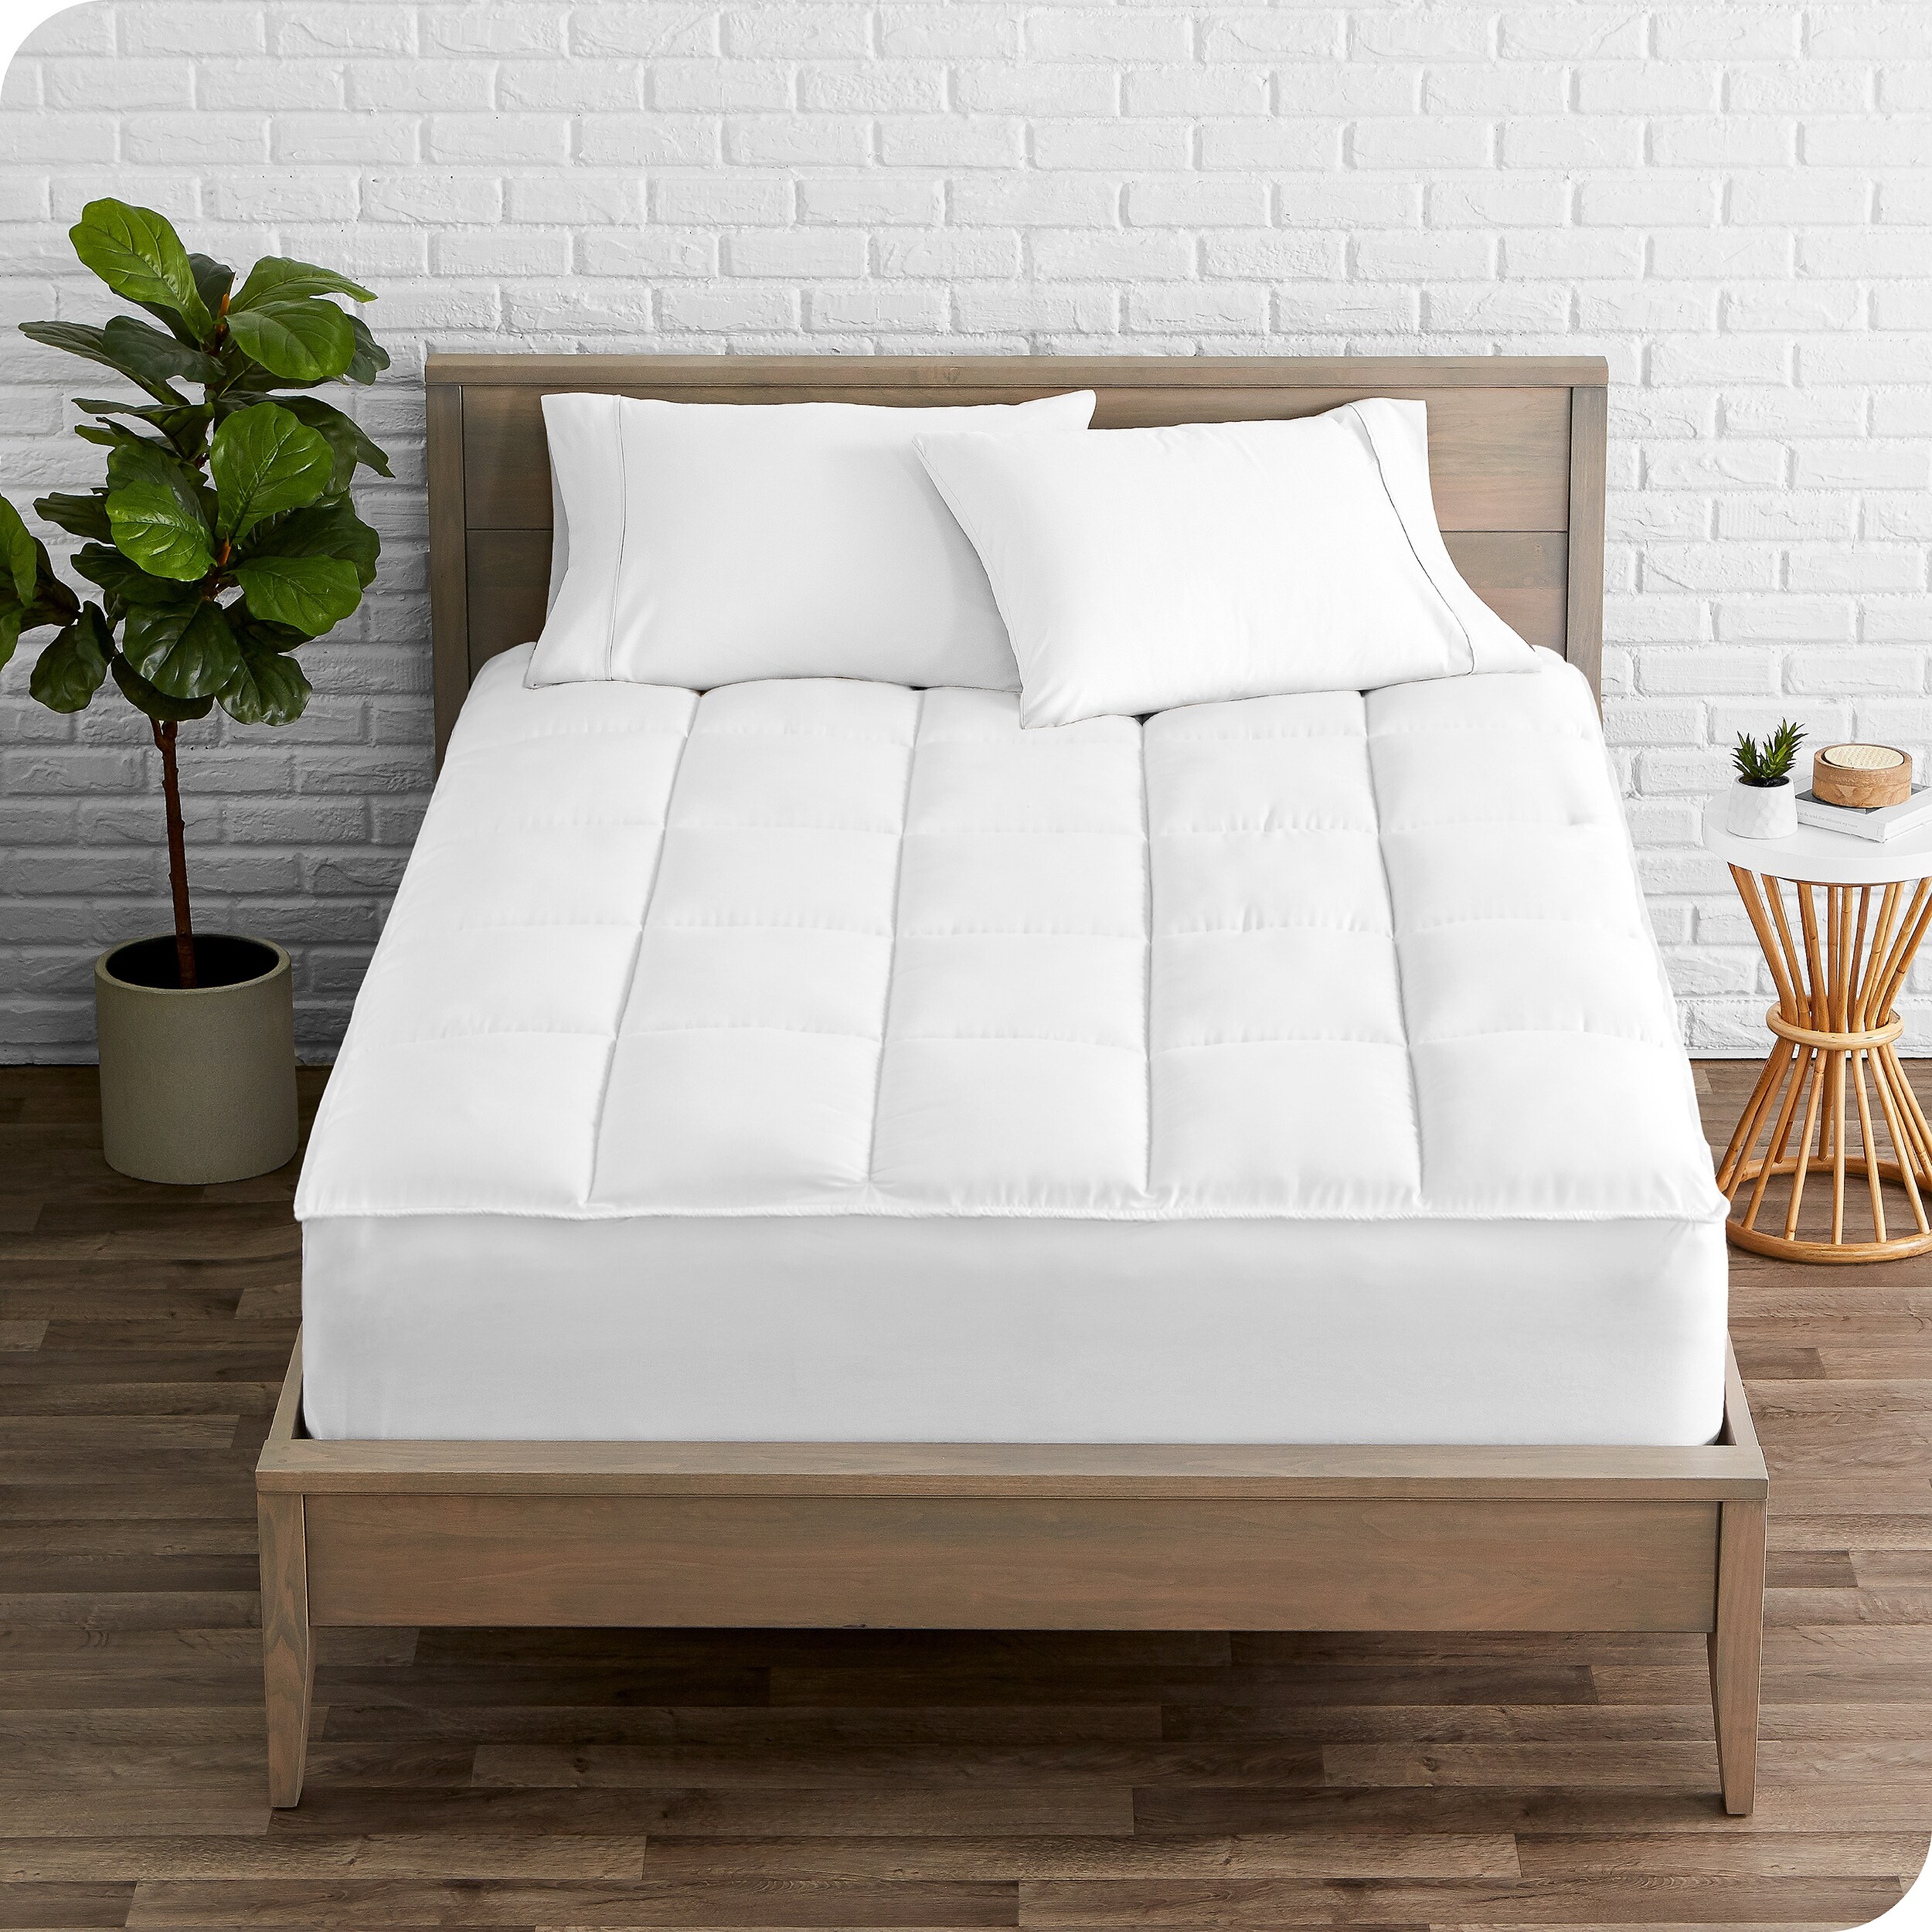 1.5 Inch Cooling Down Alternative Po Bare Home Pillow-Top Premium Mattress Pad 